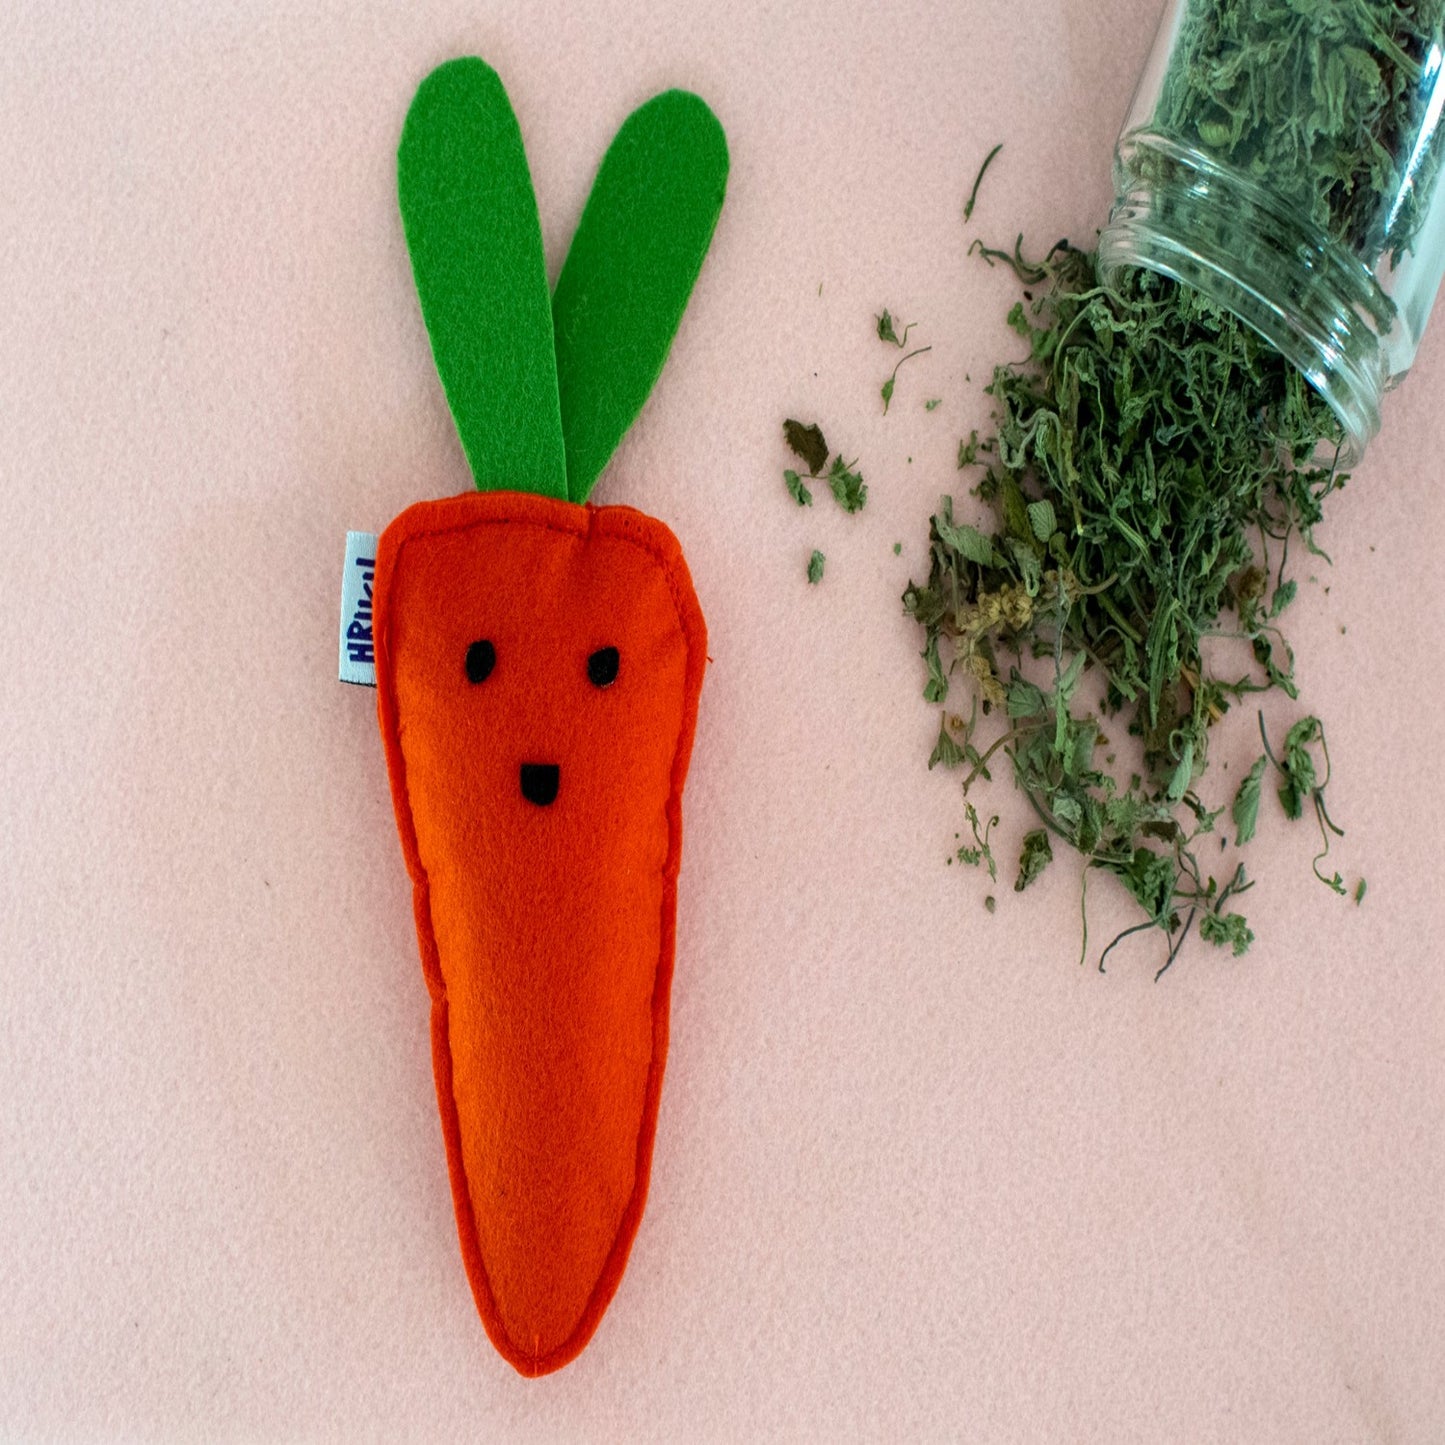 Hriku - Sumulak (Carrot) Catnip Toy For Cats